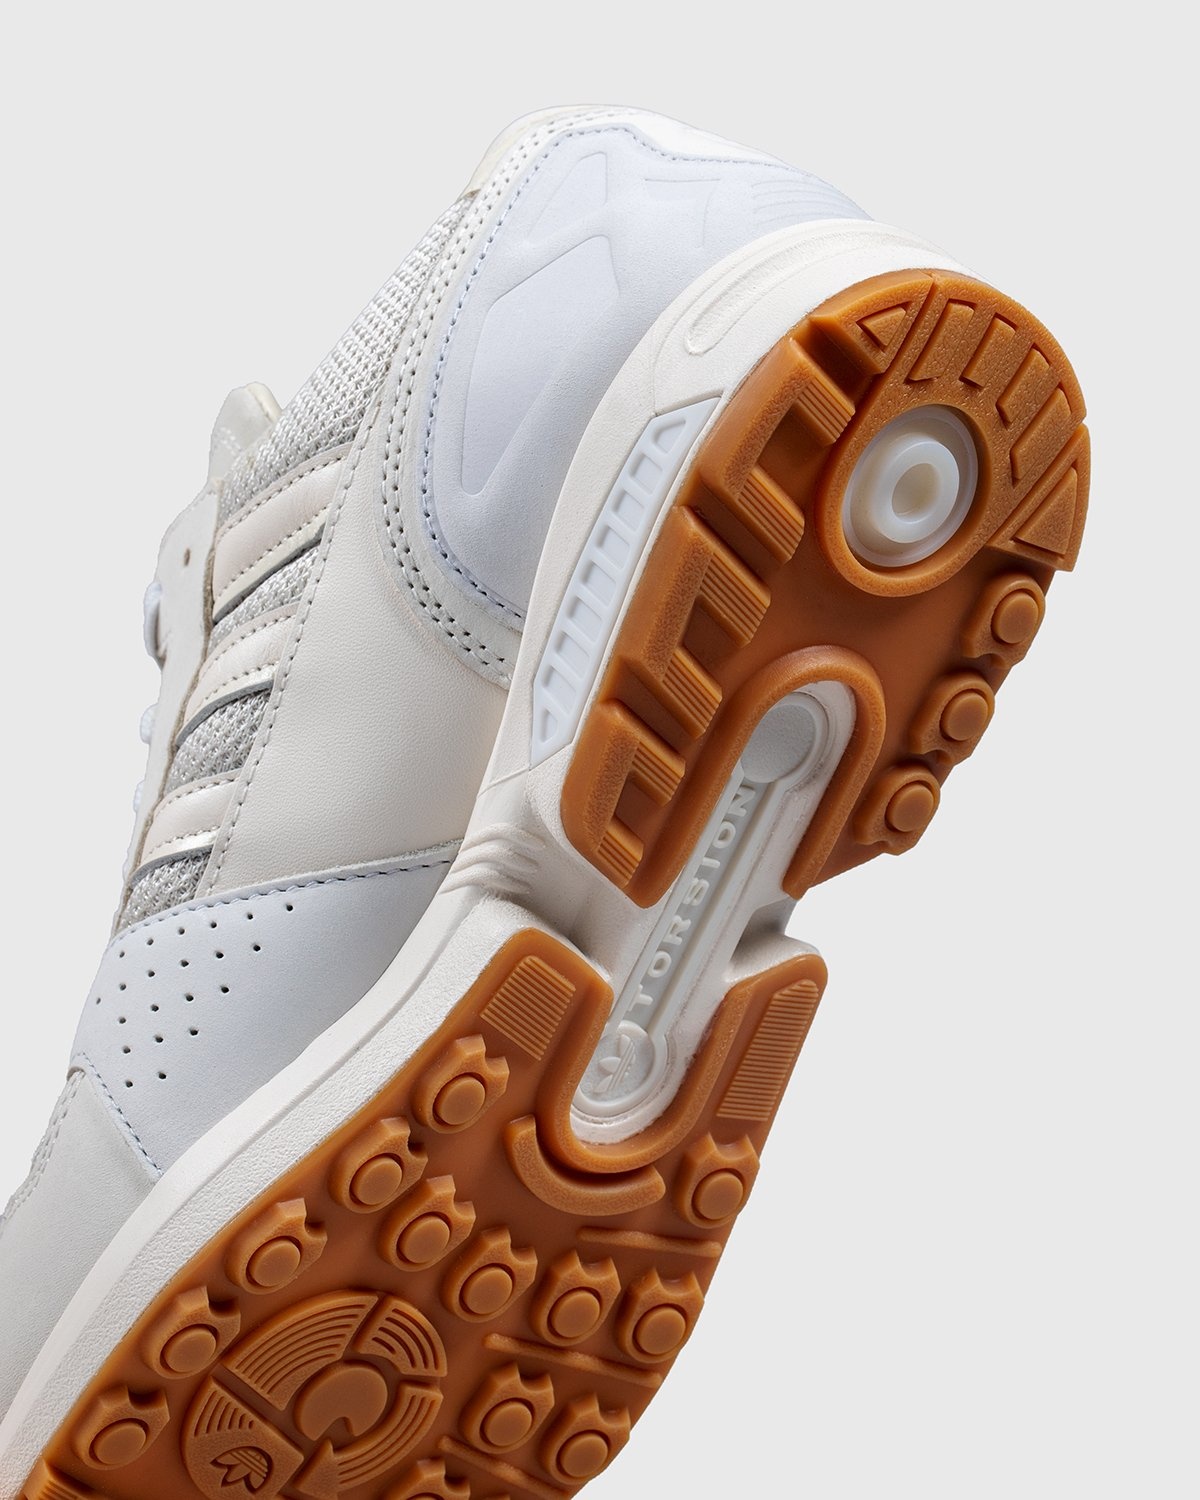 Adidas x Highsnobiety – ZX8000 Qualität Cream White - Low Top Sneakers - White - Image 6